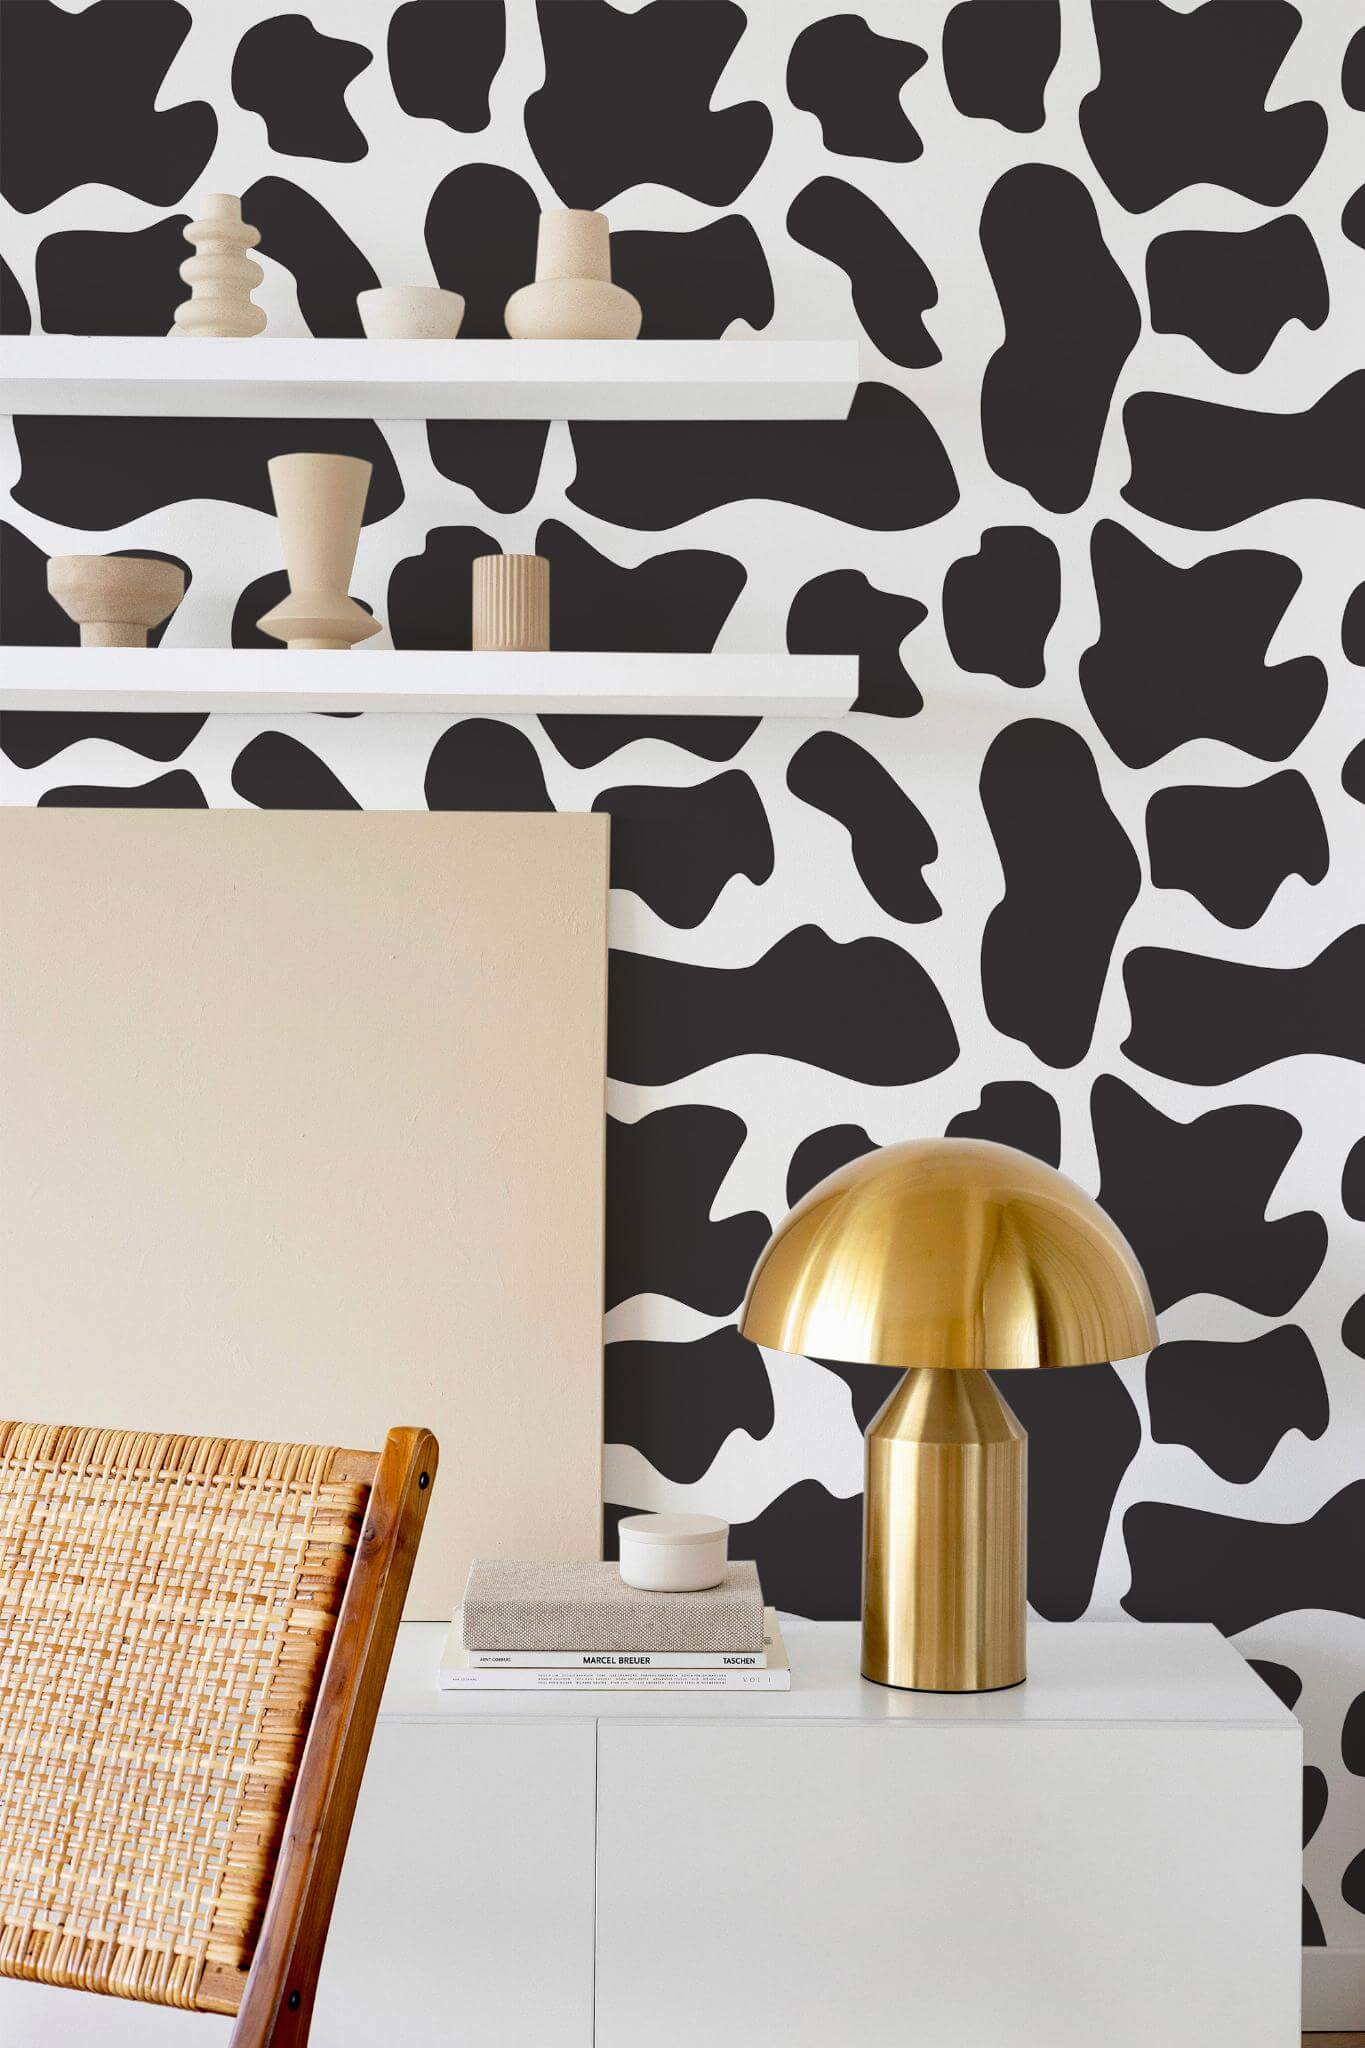 Peel & Stick Wallpaper Swatch - Cow Print Animal Black White